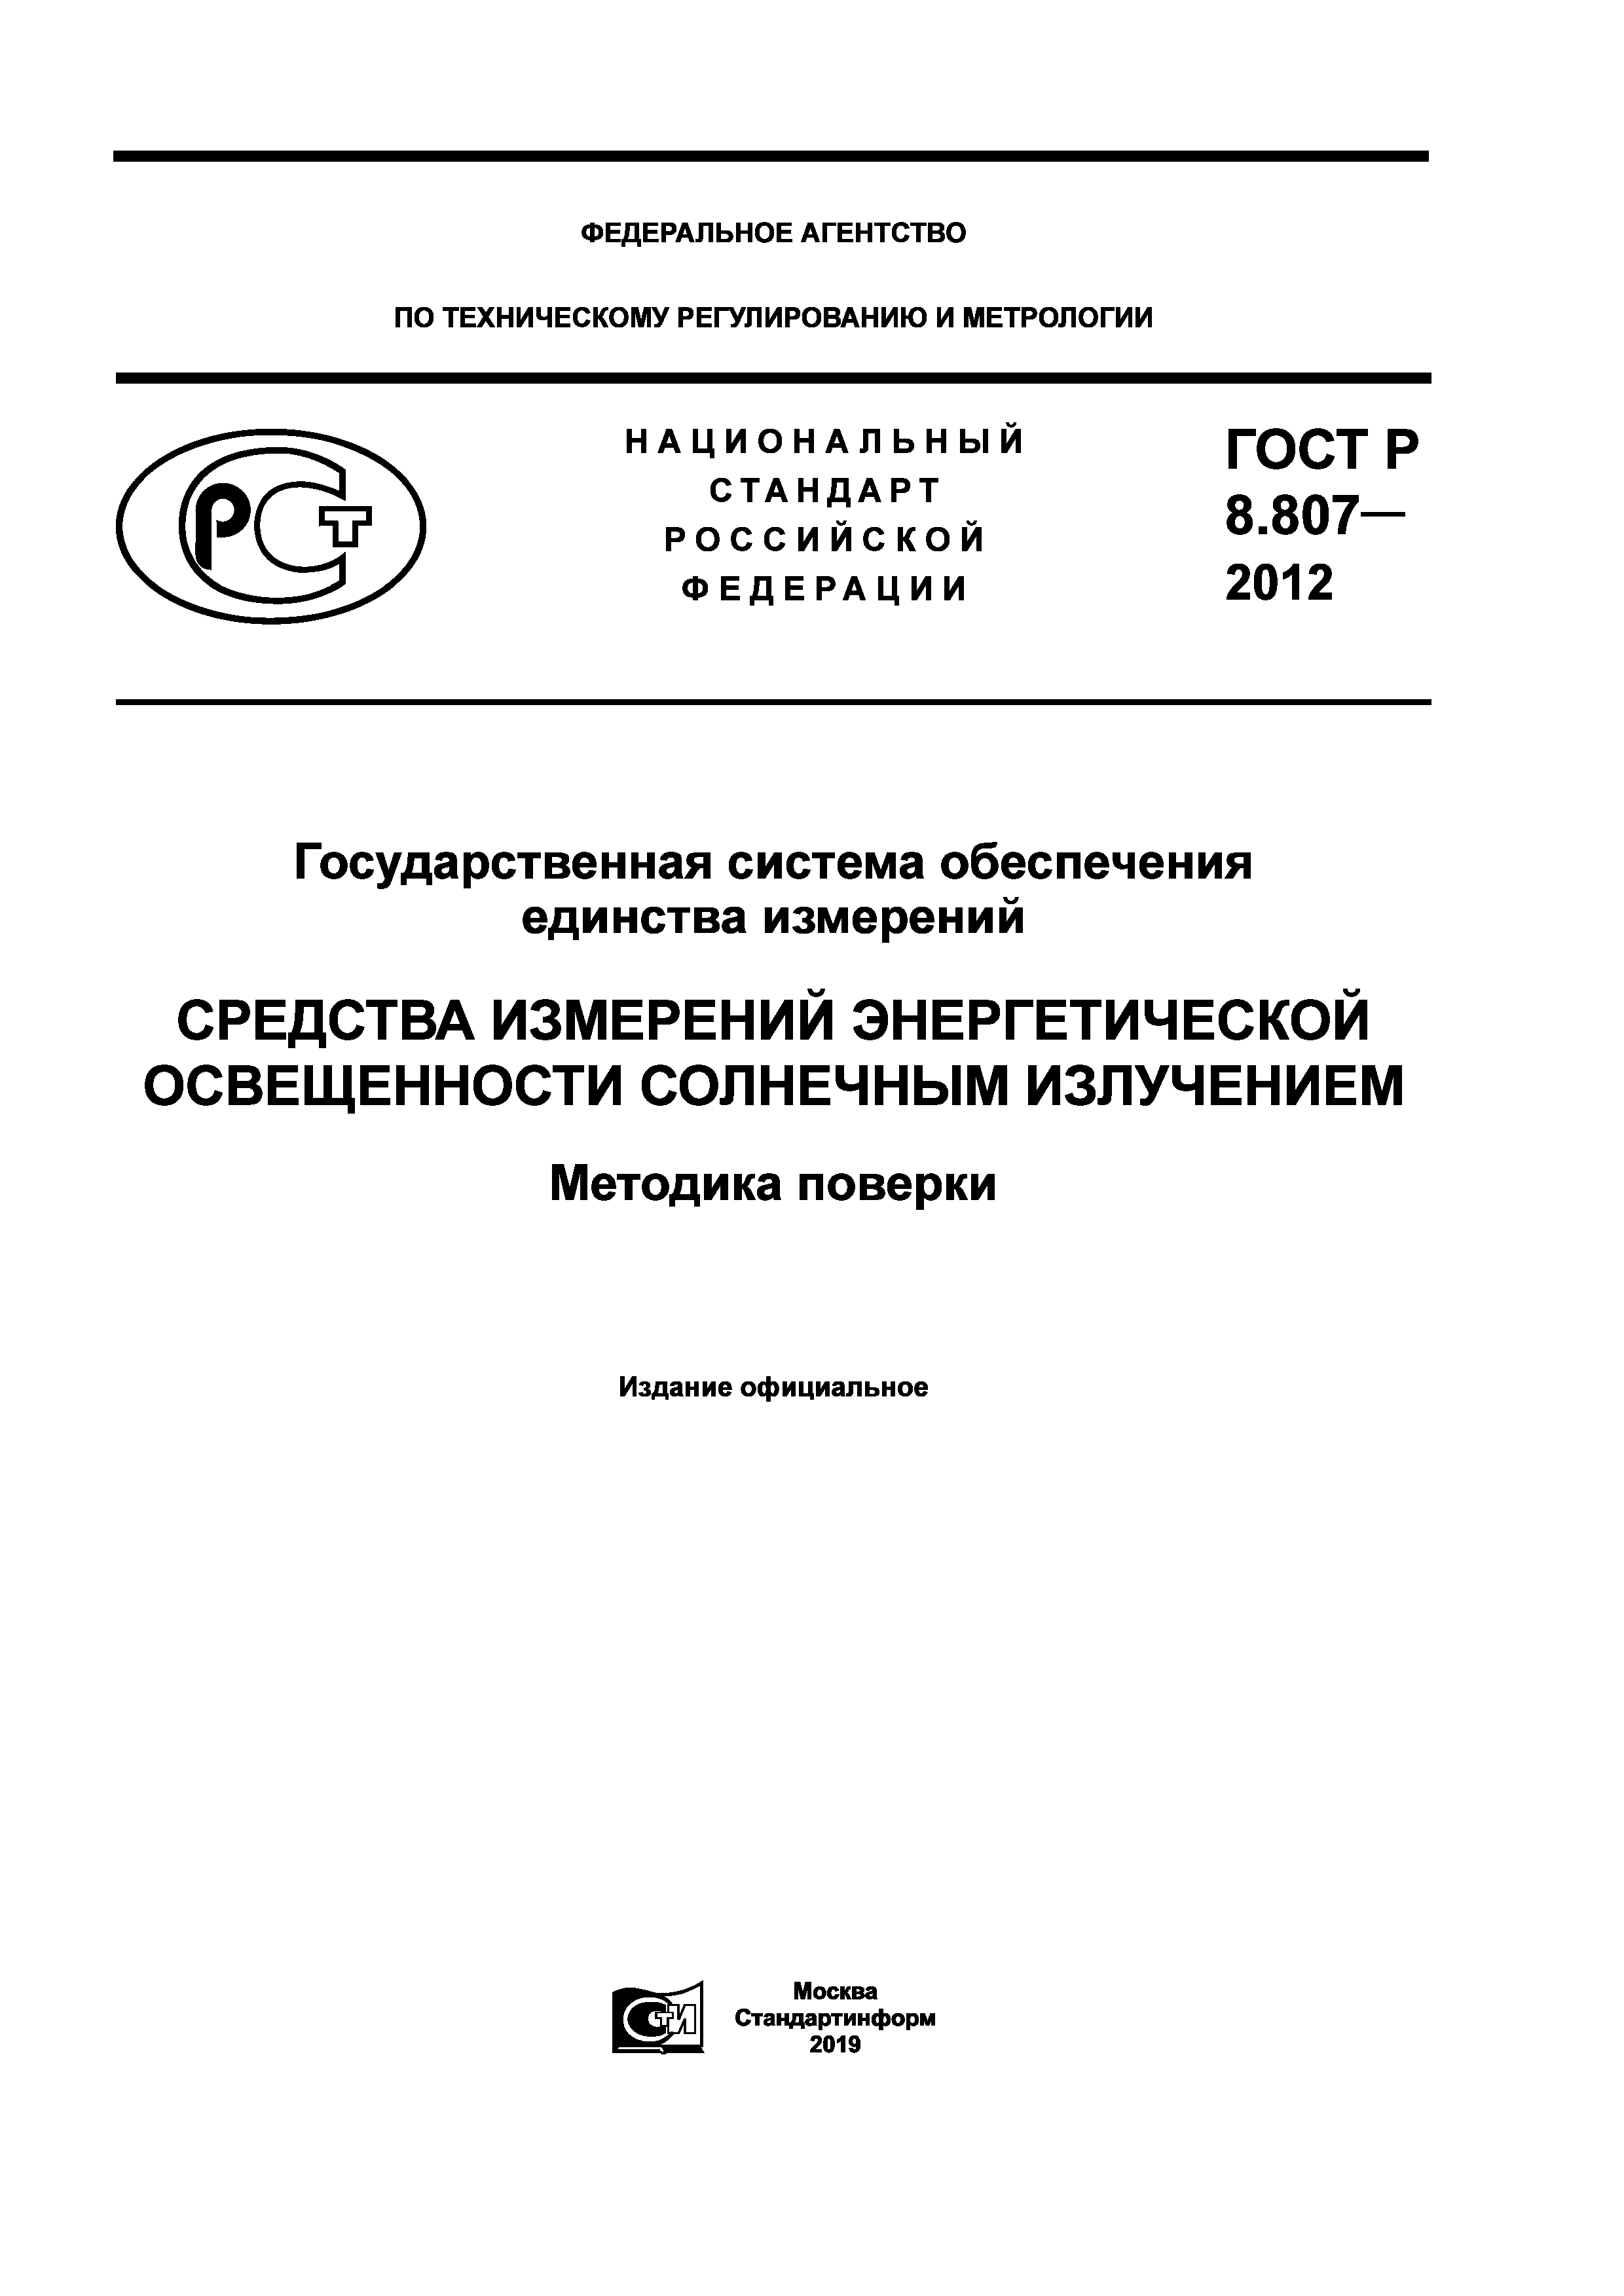 ГОСТ Р 8.807-2012